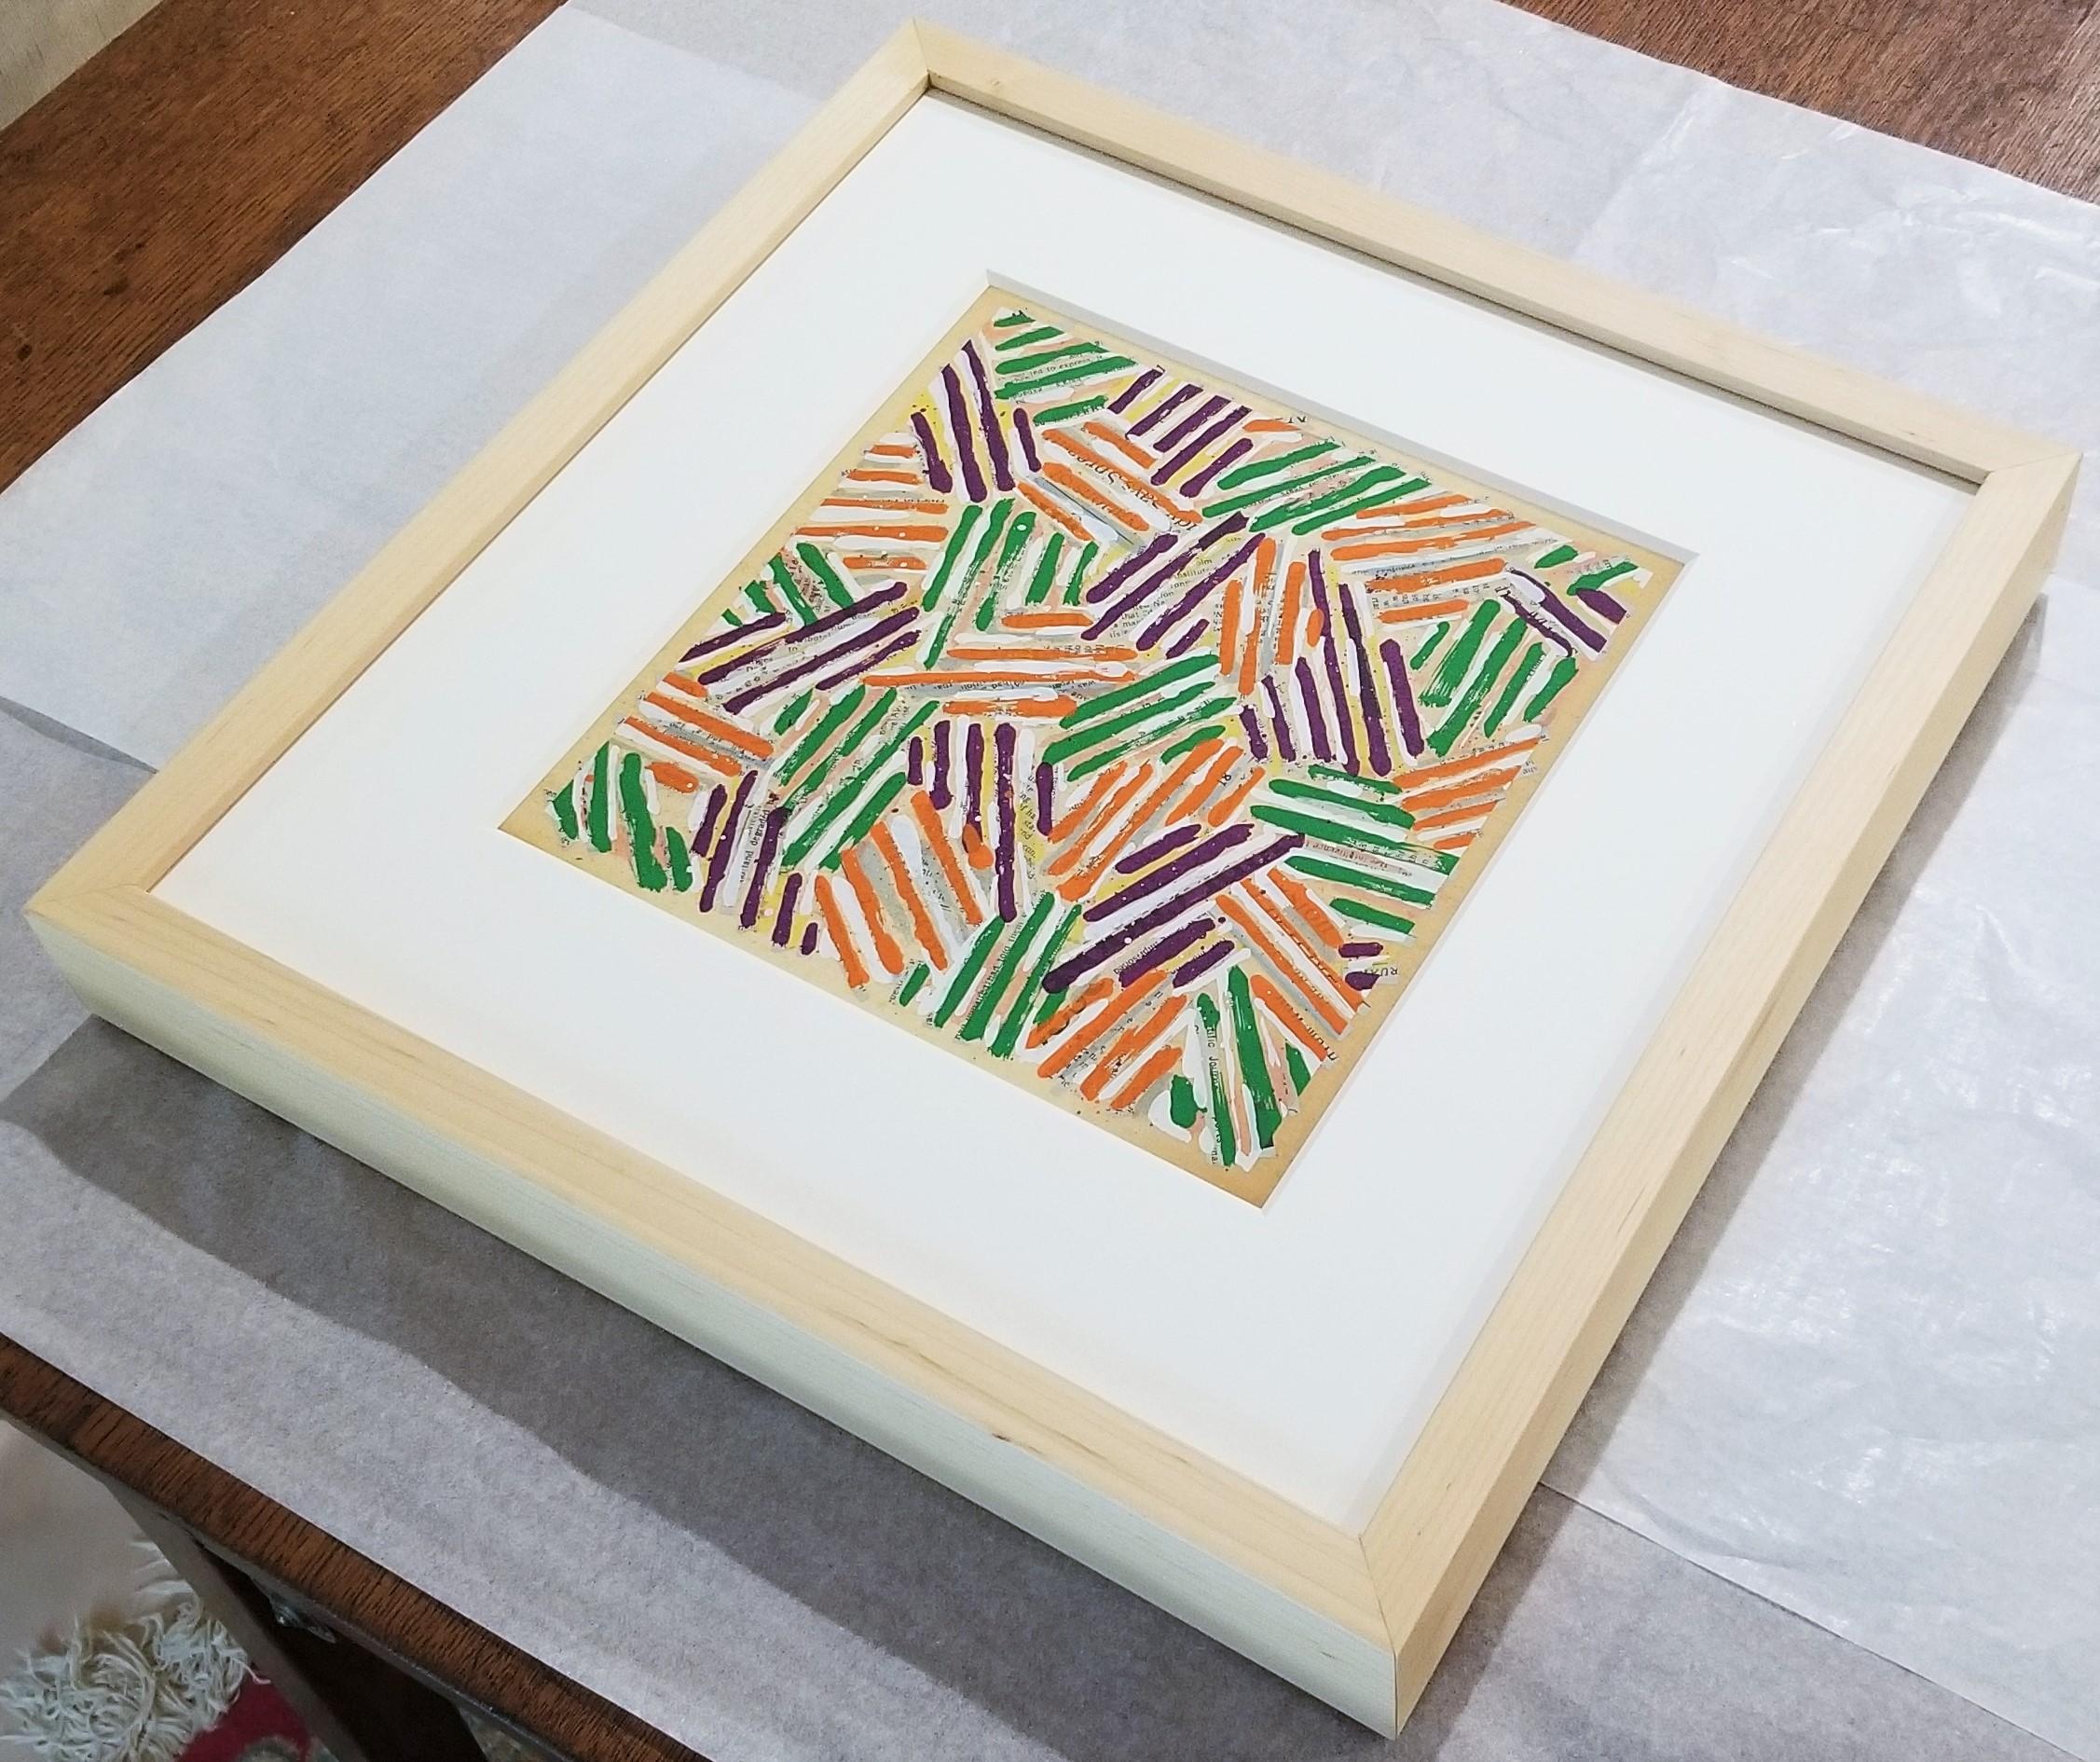 Untitled (Cross Hatch) /// Abstract Geometric Jasper Johns Minimal Screenprint For Sale 15